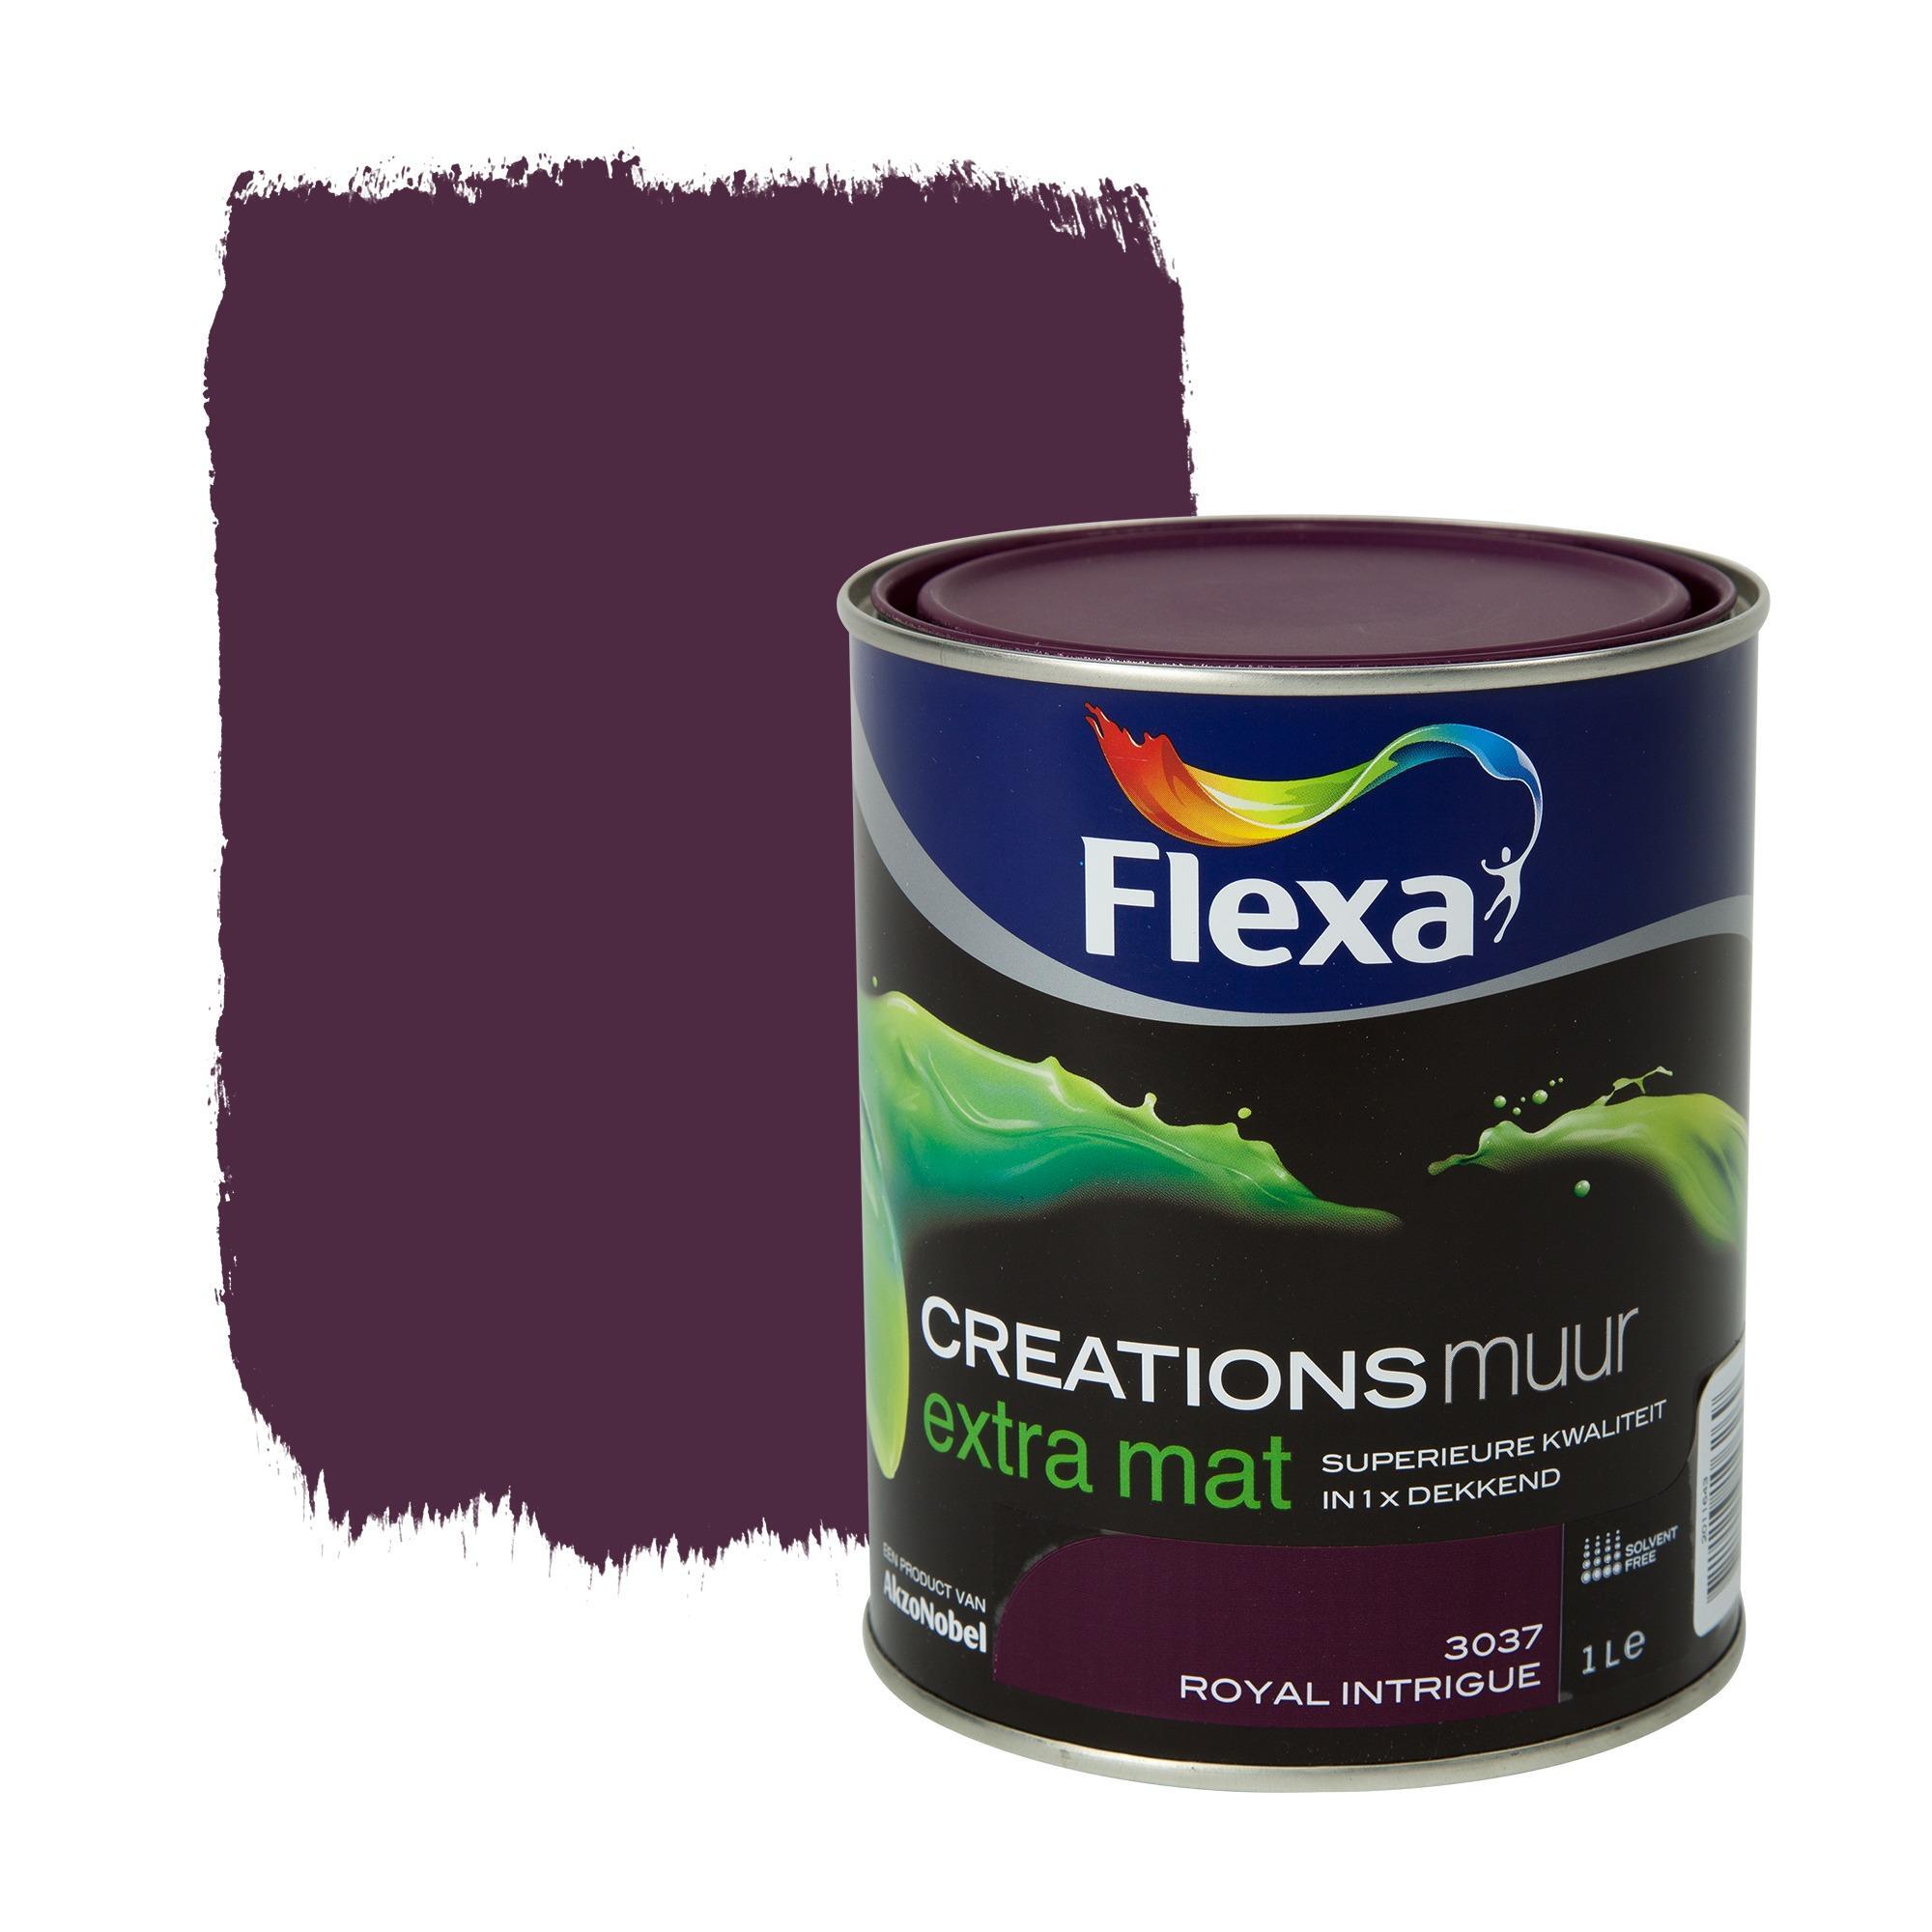 FLEXA Creations muurverf royal intrigue extra mat 1 liter